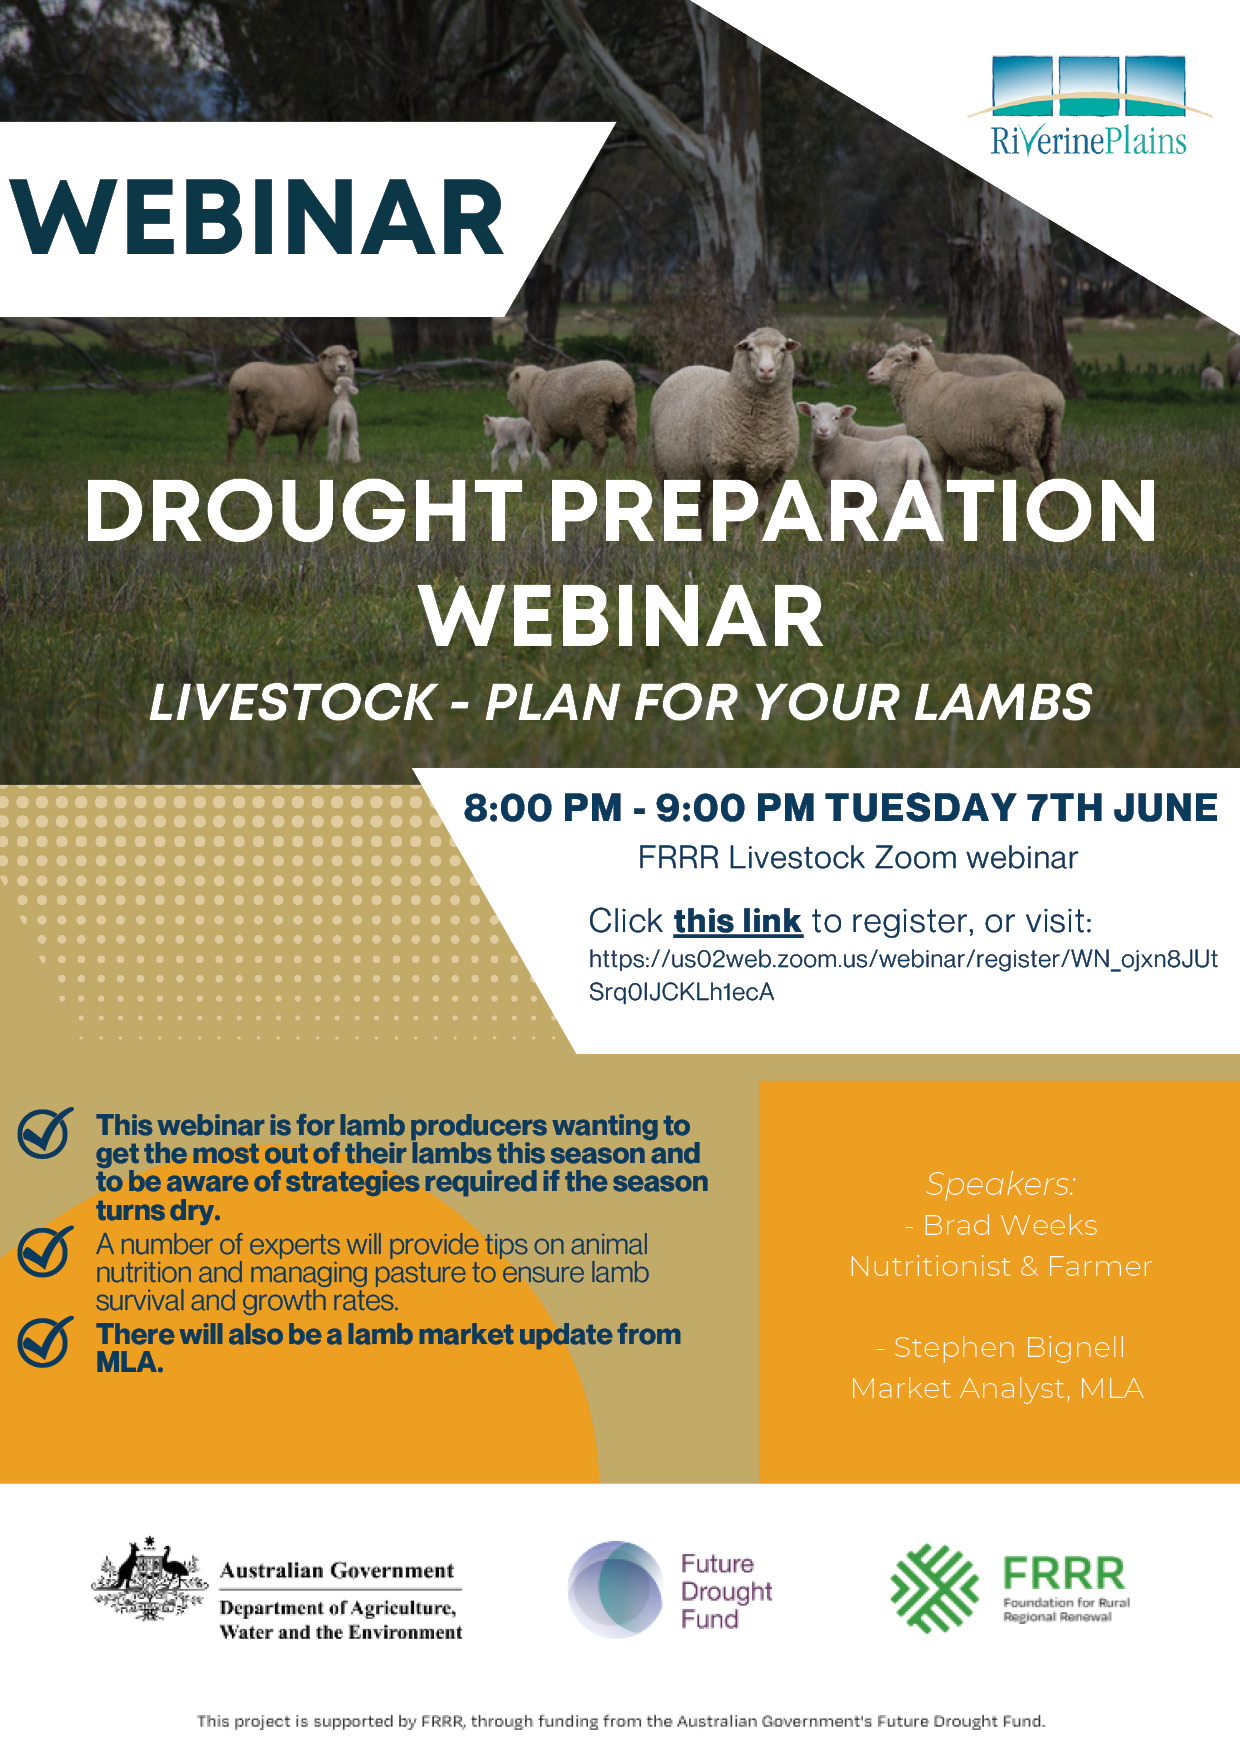 Drought preparation for lamb producers webinar flyer